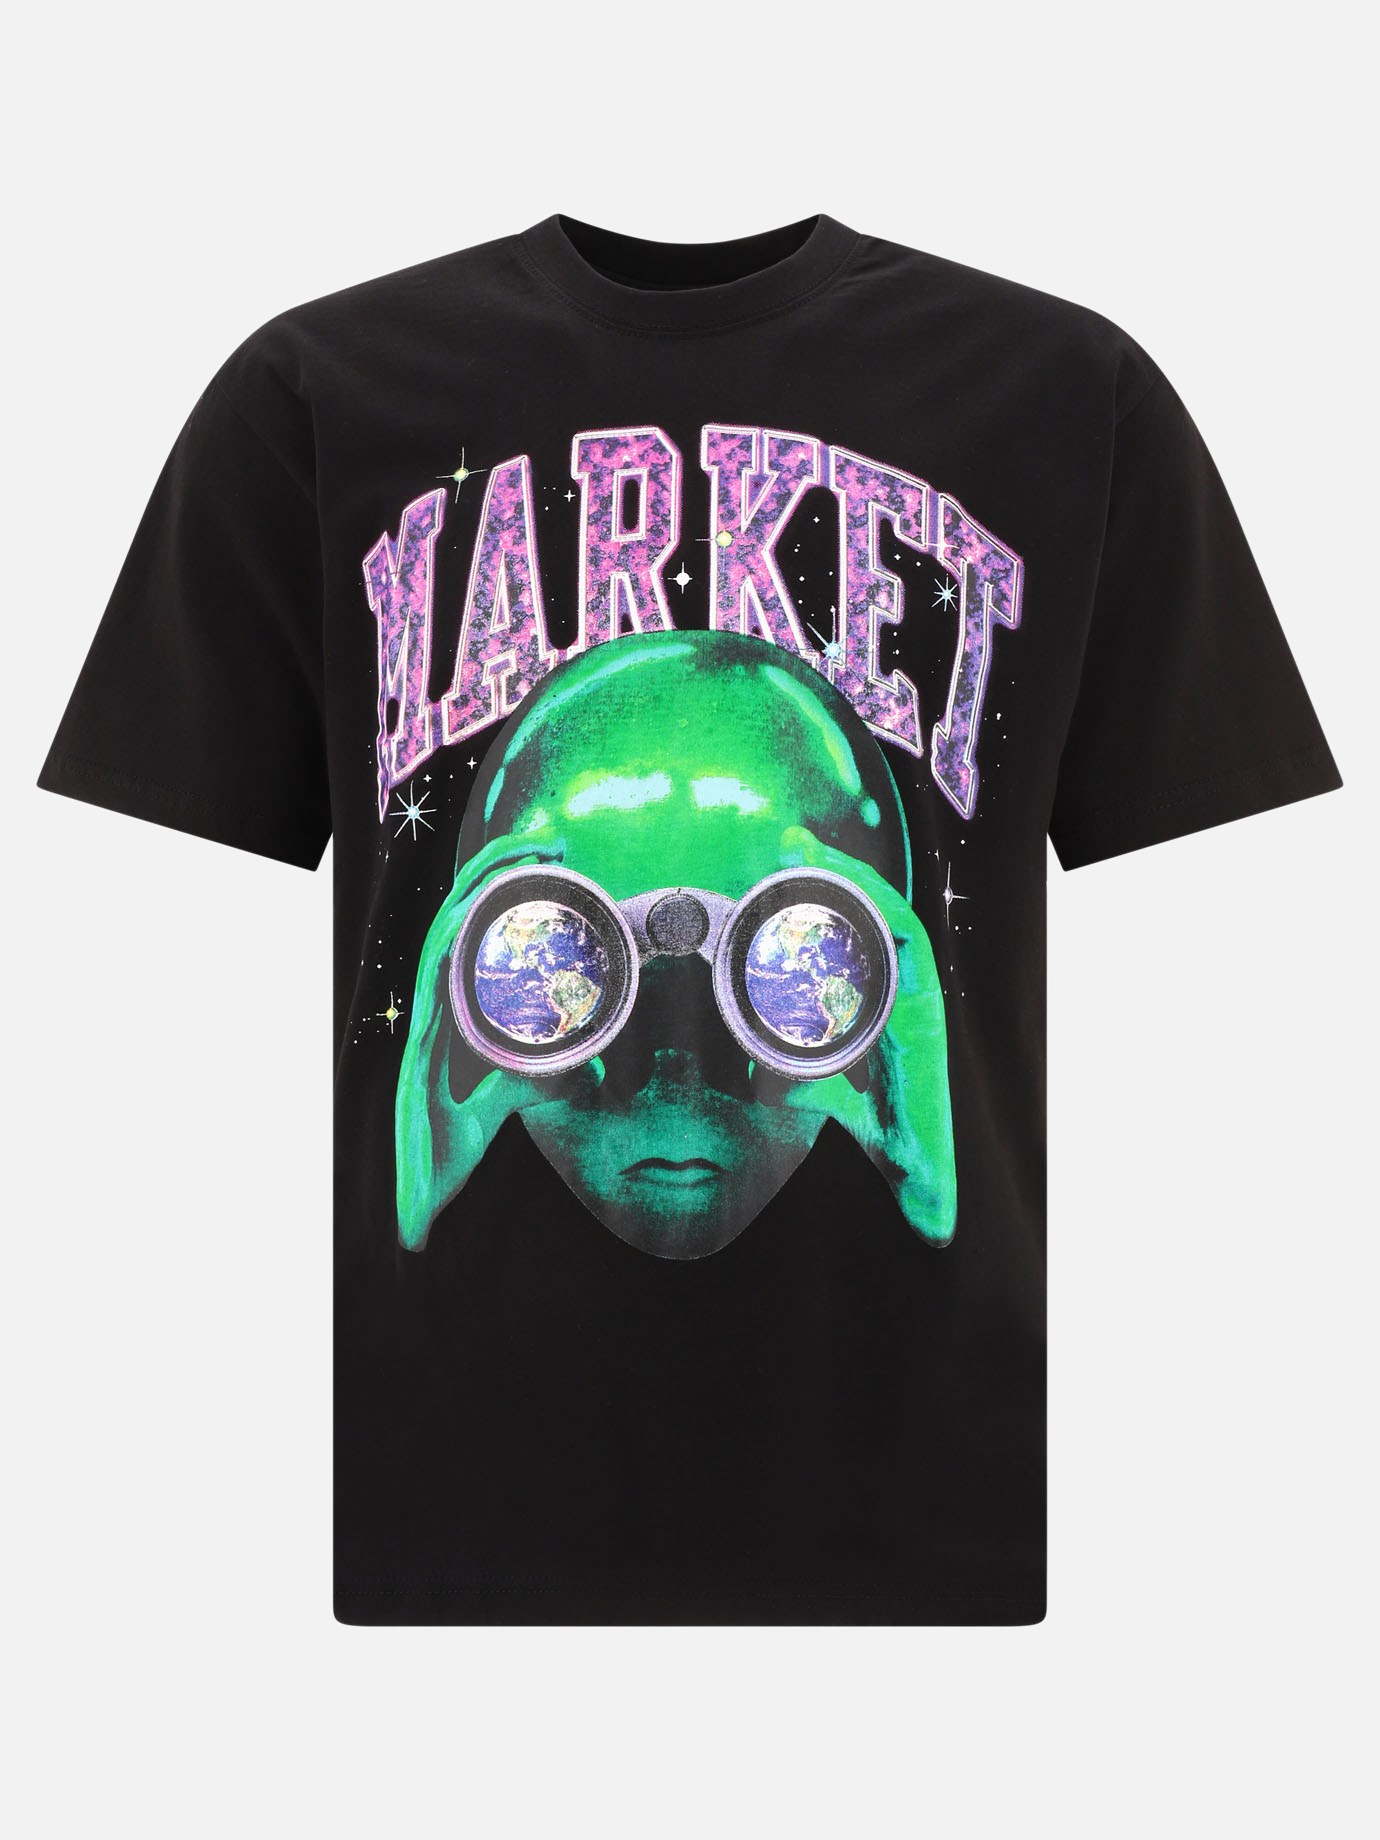  Alien Sightseeing  t-shirtby Market - 3